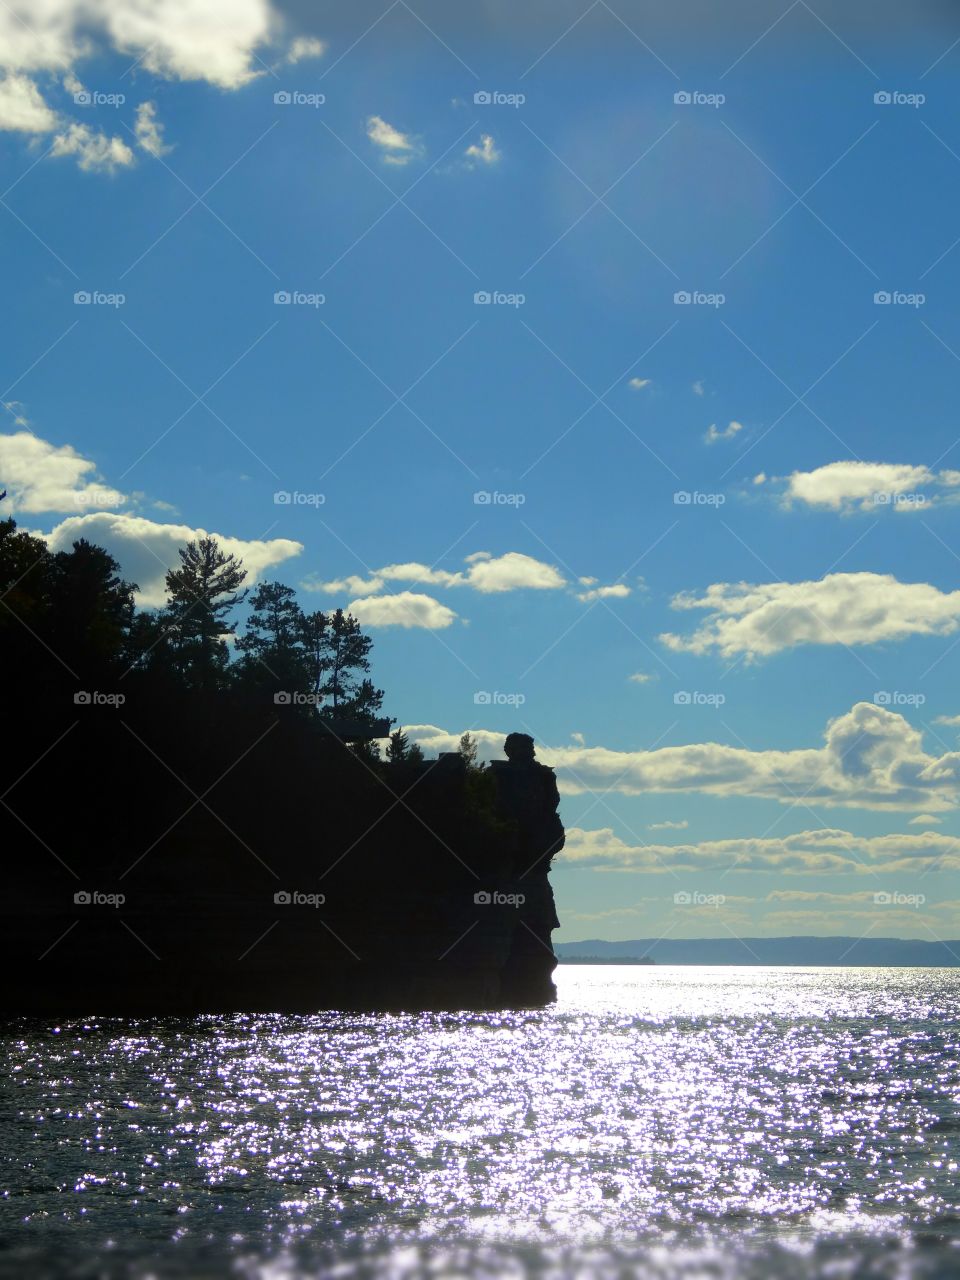 Pictured Rocks, Munising Michigan Beautiful silhouette